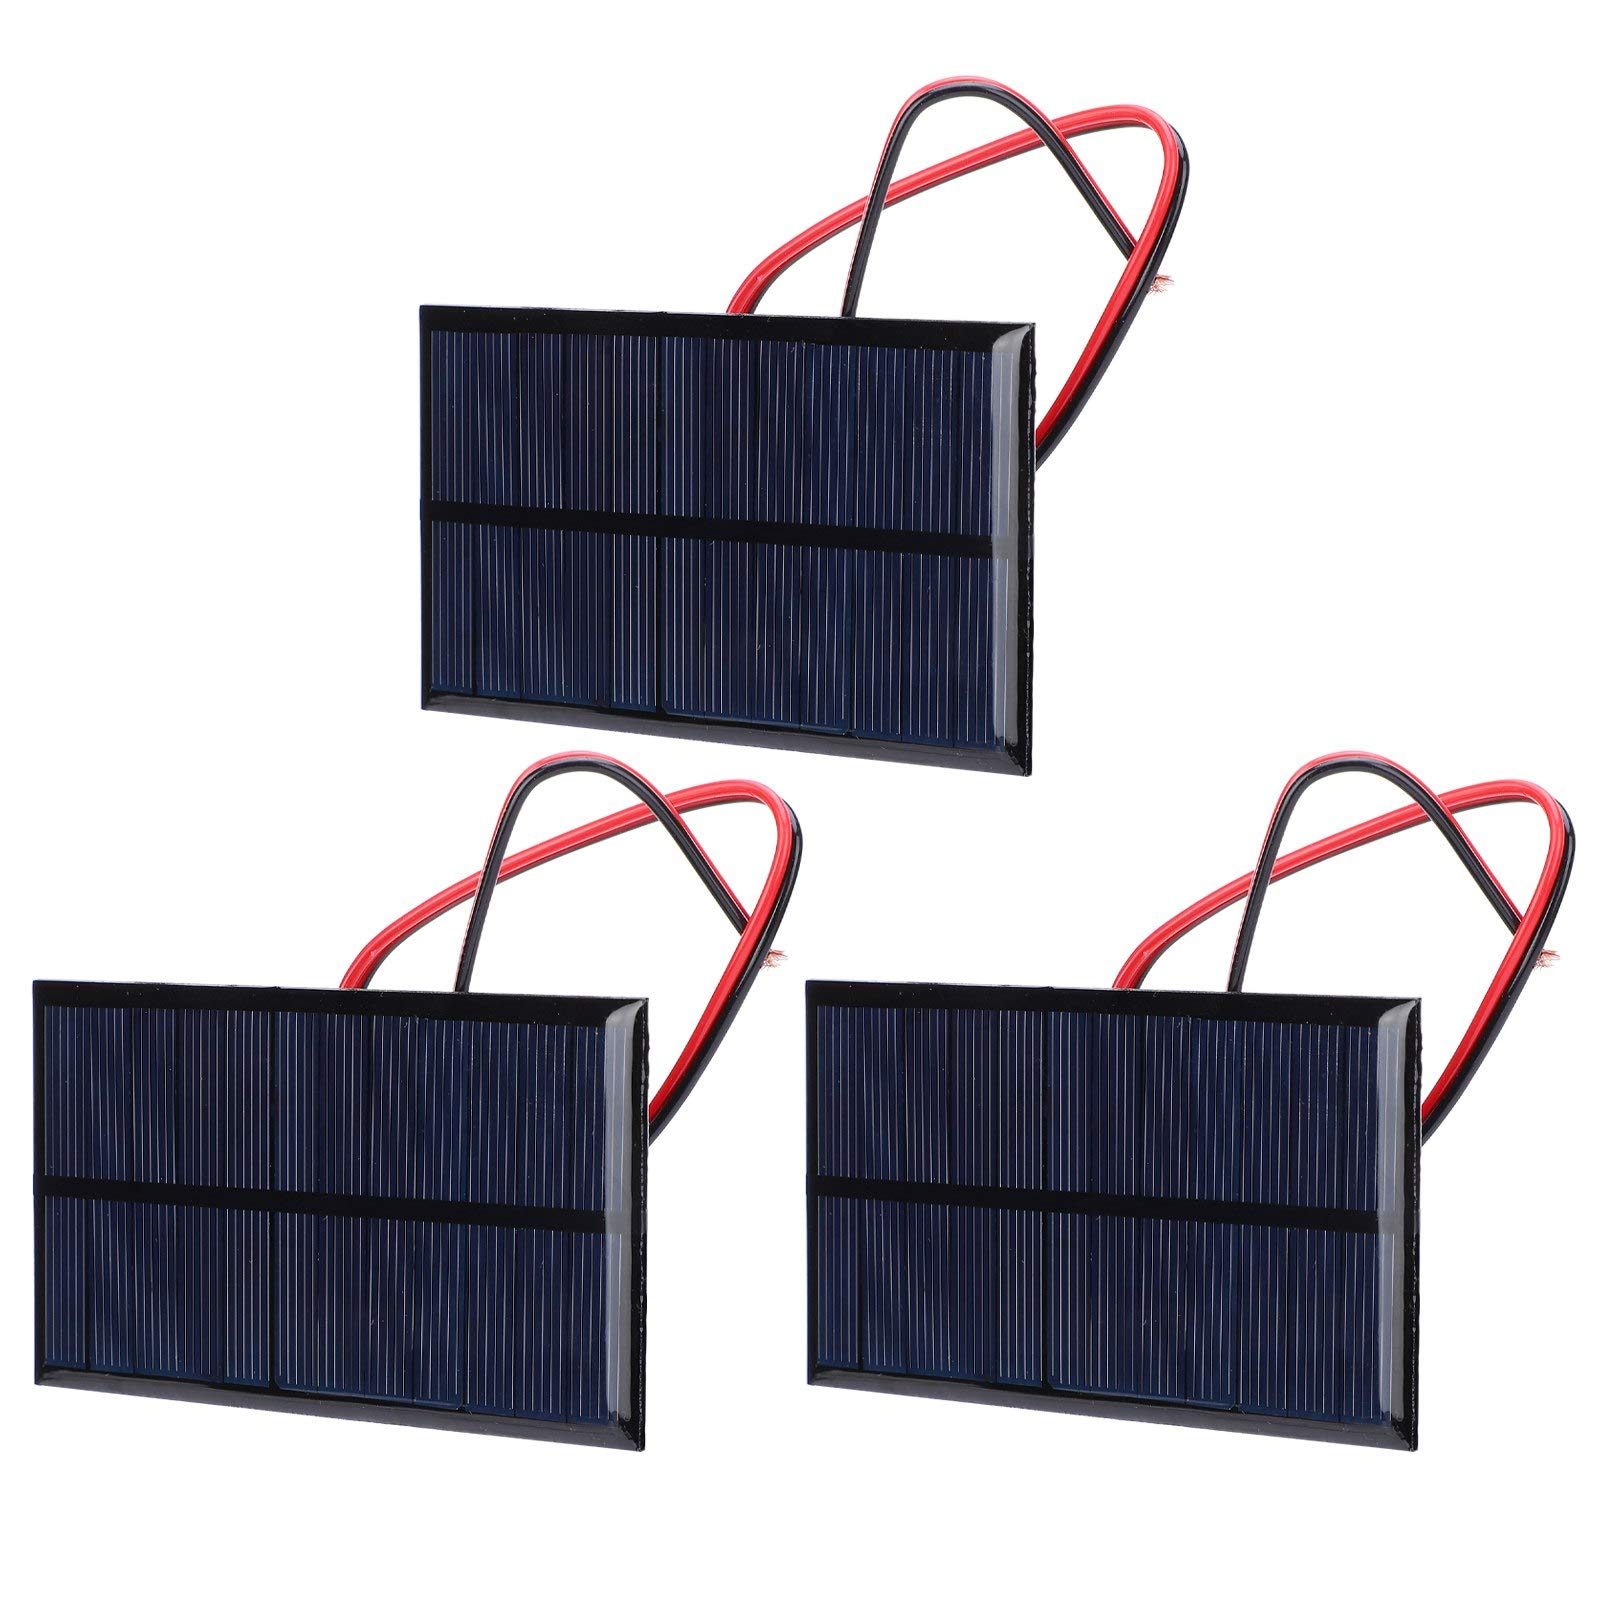 Epoxy Solar Panel, 3Pcs Mini Solar Panel, Solar Power Module, 3pcs DC 6V 1W Solar Panel Cell Power Module Polycrystalline Silicon Solar Panel with 30cm Cable